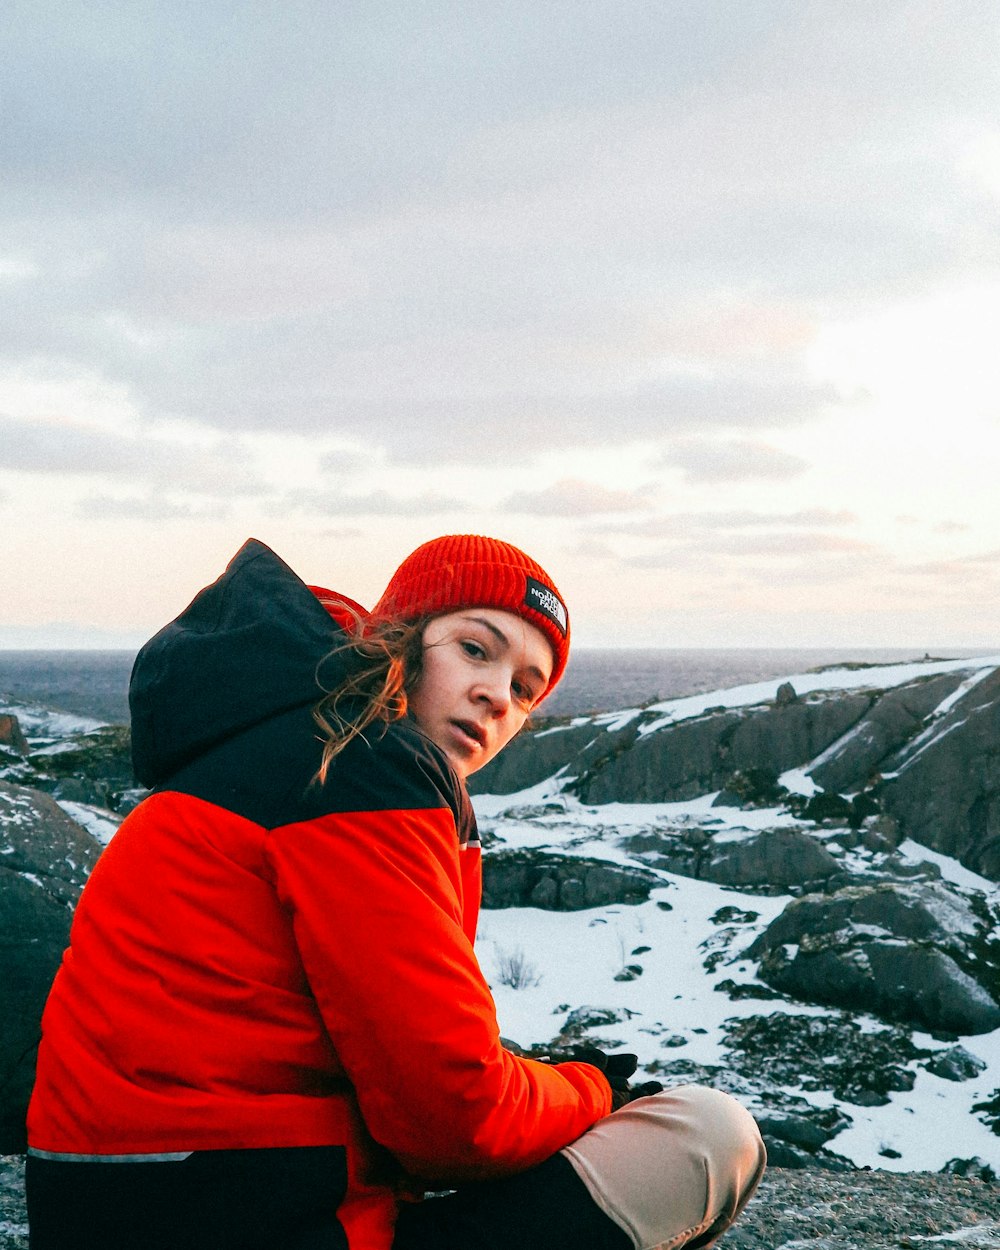 Una donna seduta sulla cima di una montagna coperta di neve